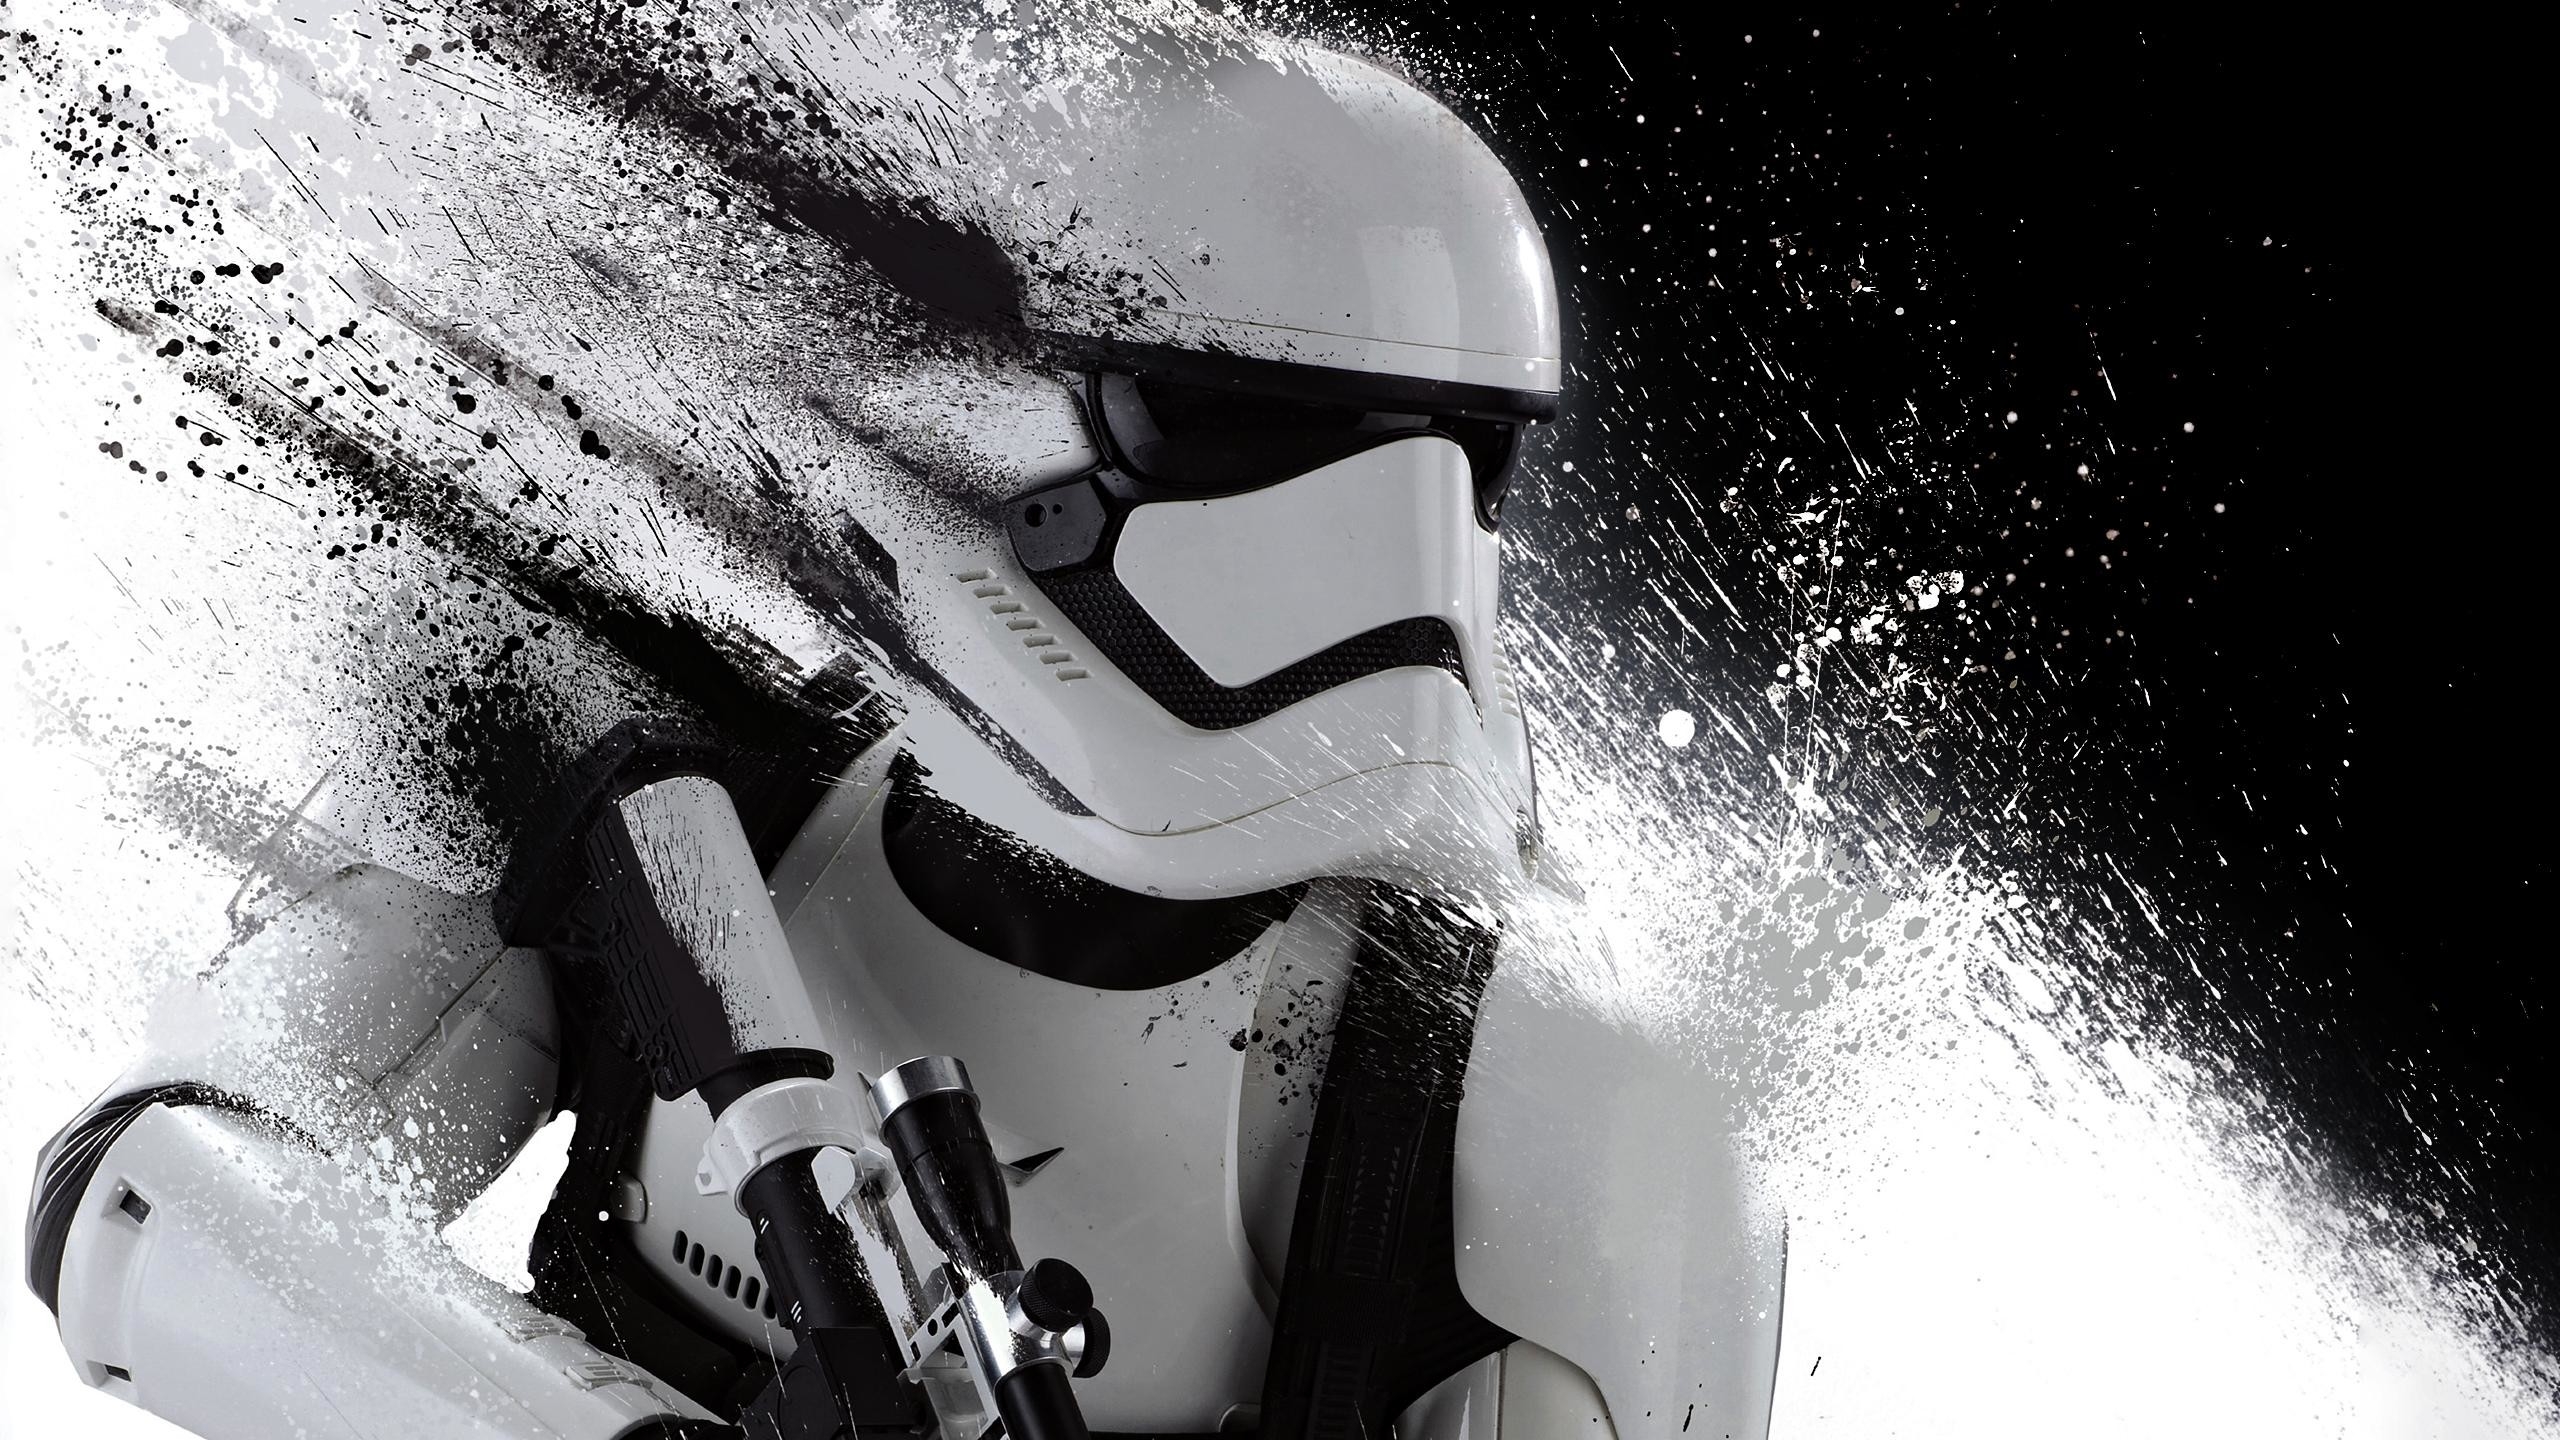 Wallpaper Jedi Star Wars Clone Trooper pc Game Action Film Background   Download Free Image